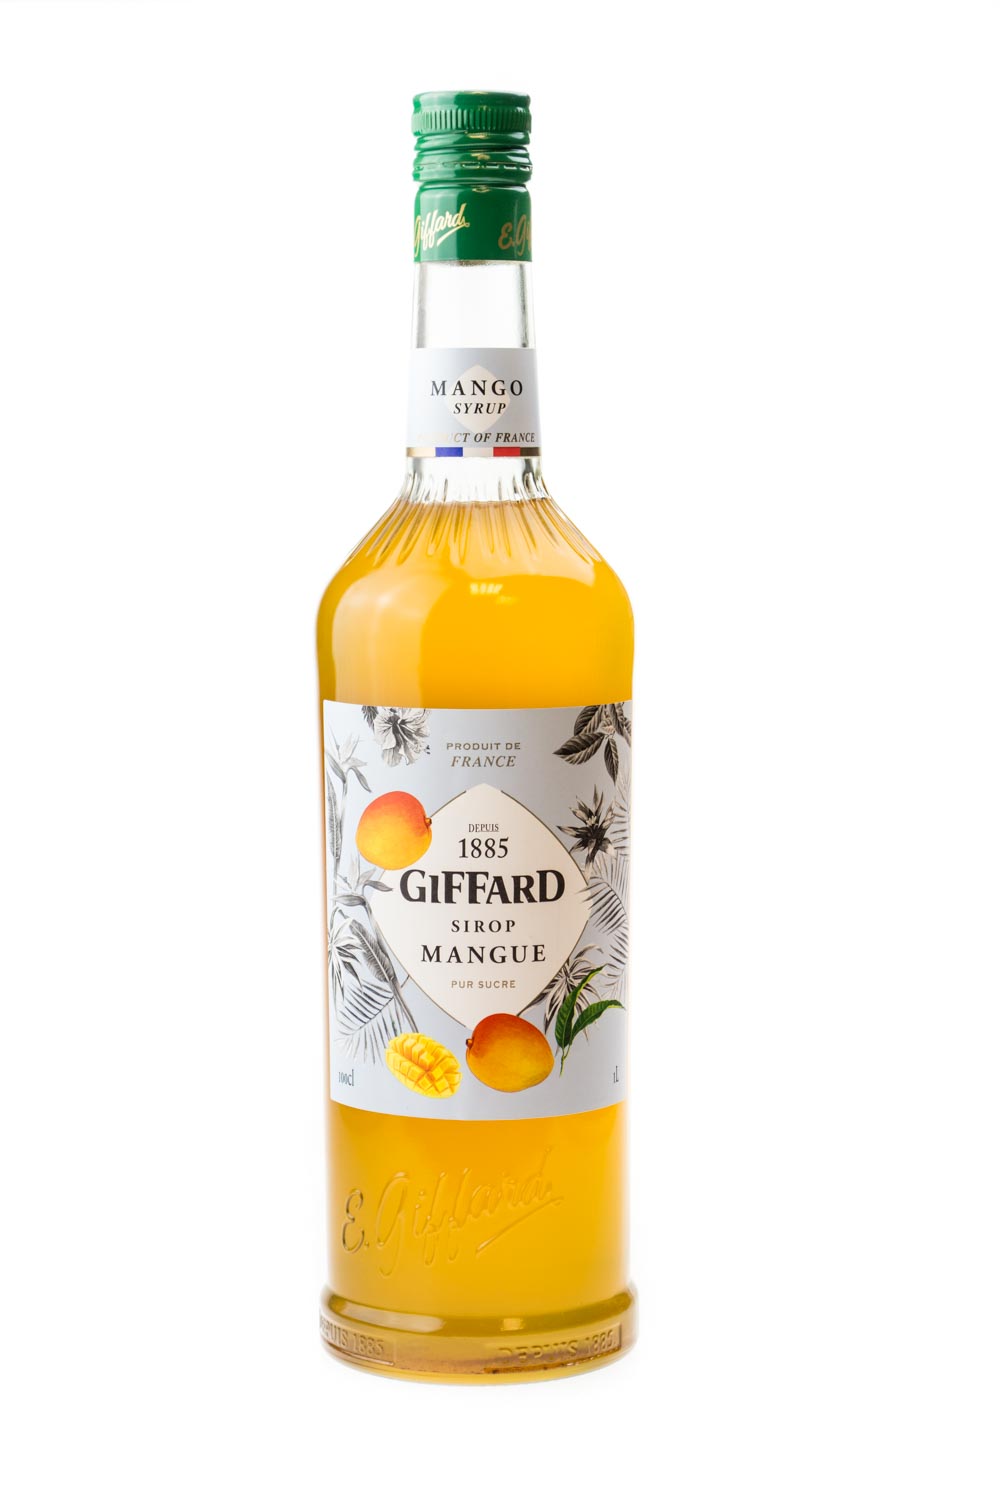 Giffard Mango Sirup Mangue - 1 Liter